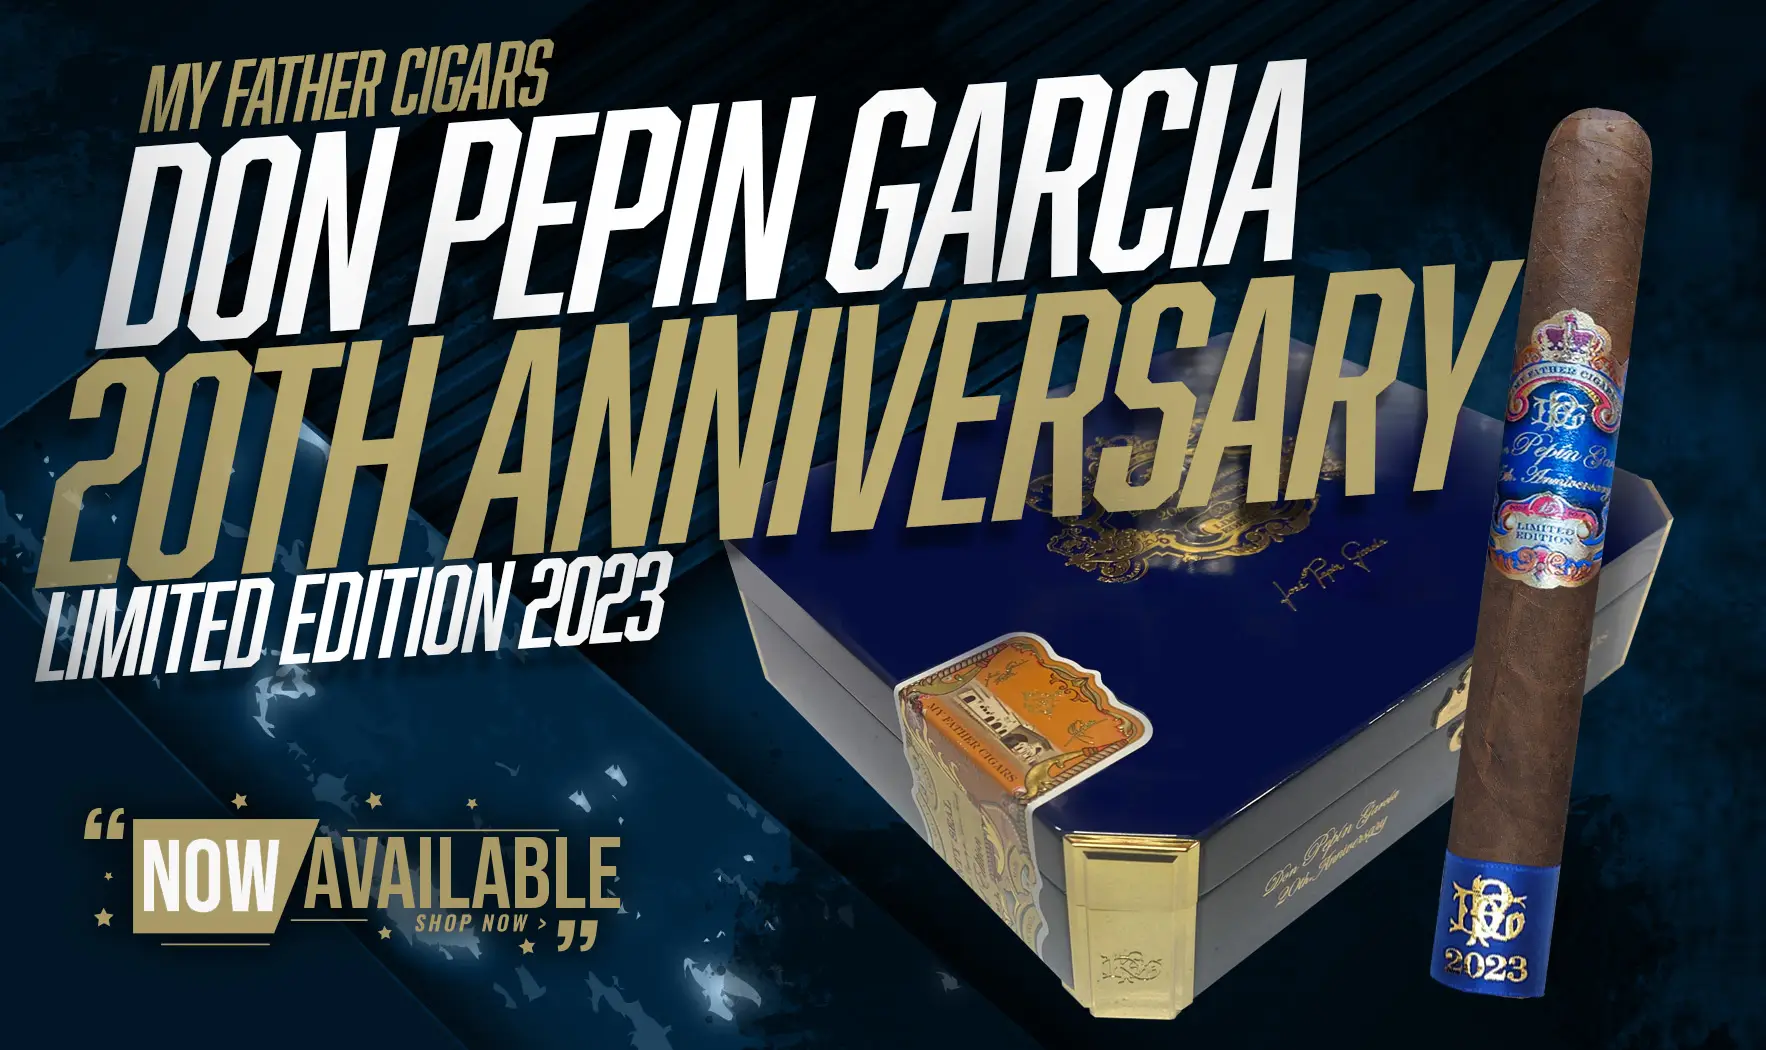 Don Pepin Garcia 20th Anniversary Limited Edition